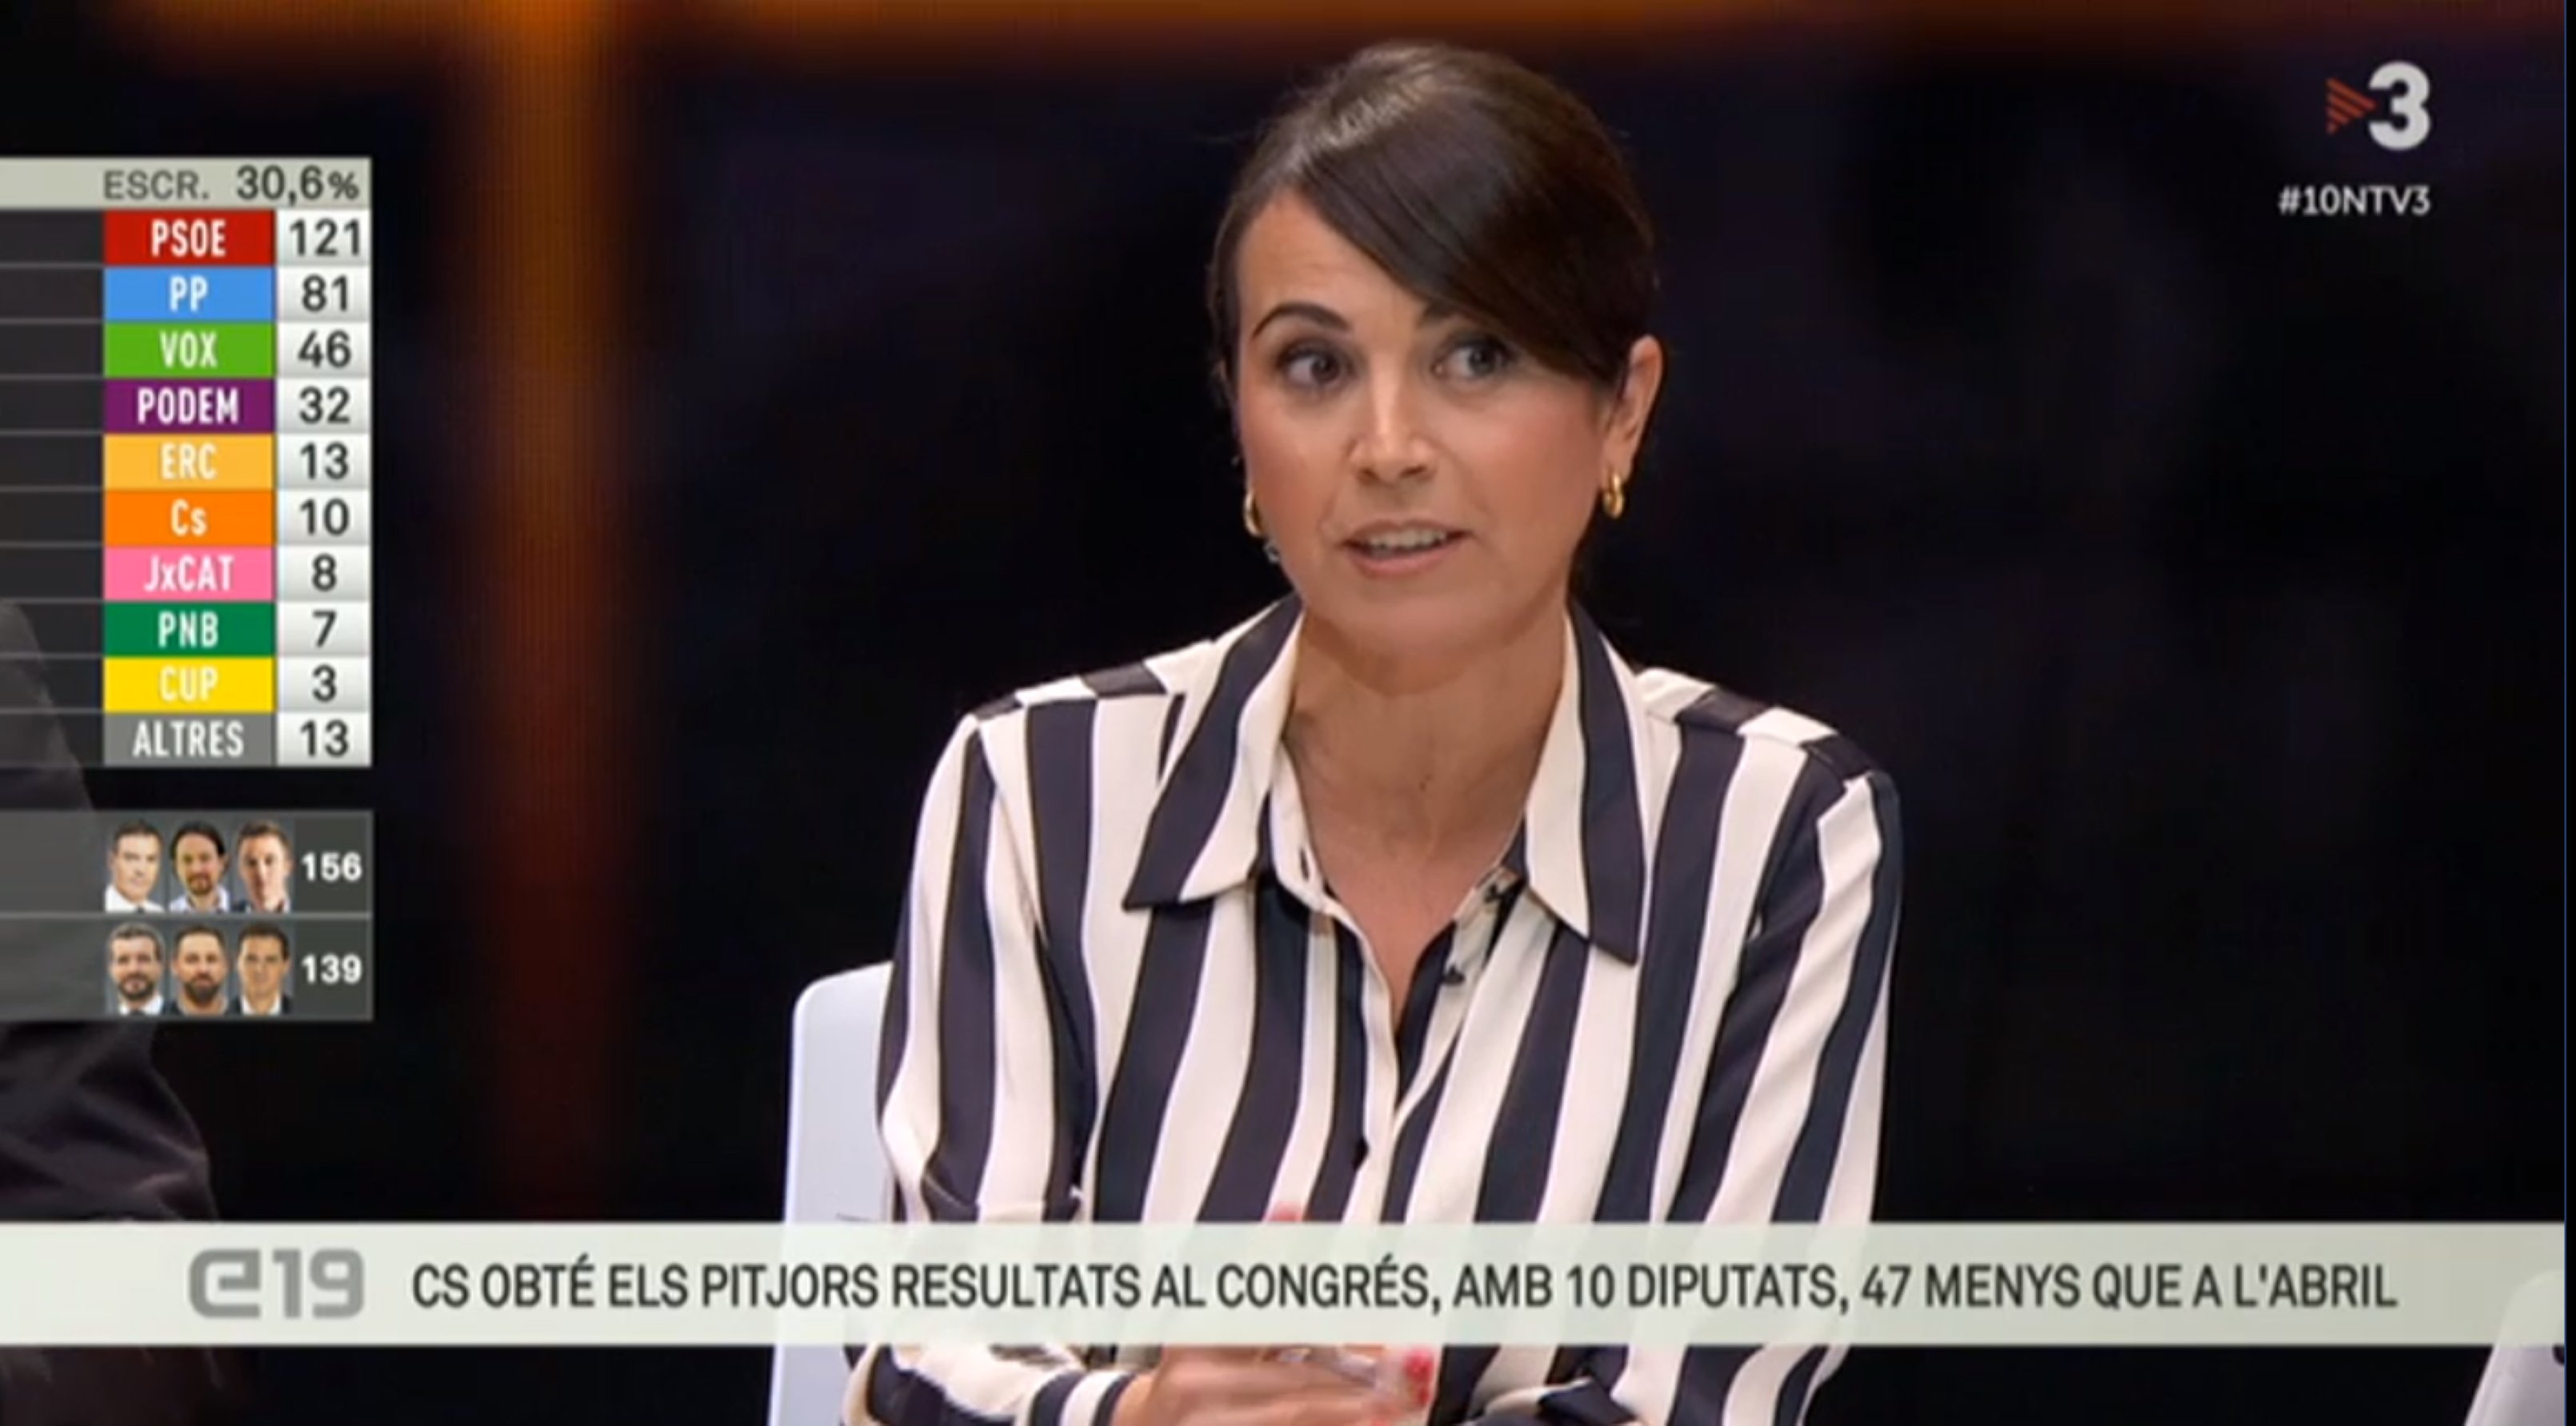 Lídia Heredia ensorra Albert Rivera a TV3: "Hasta luego, Lucas"